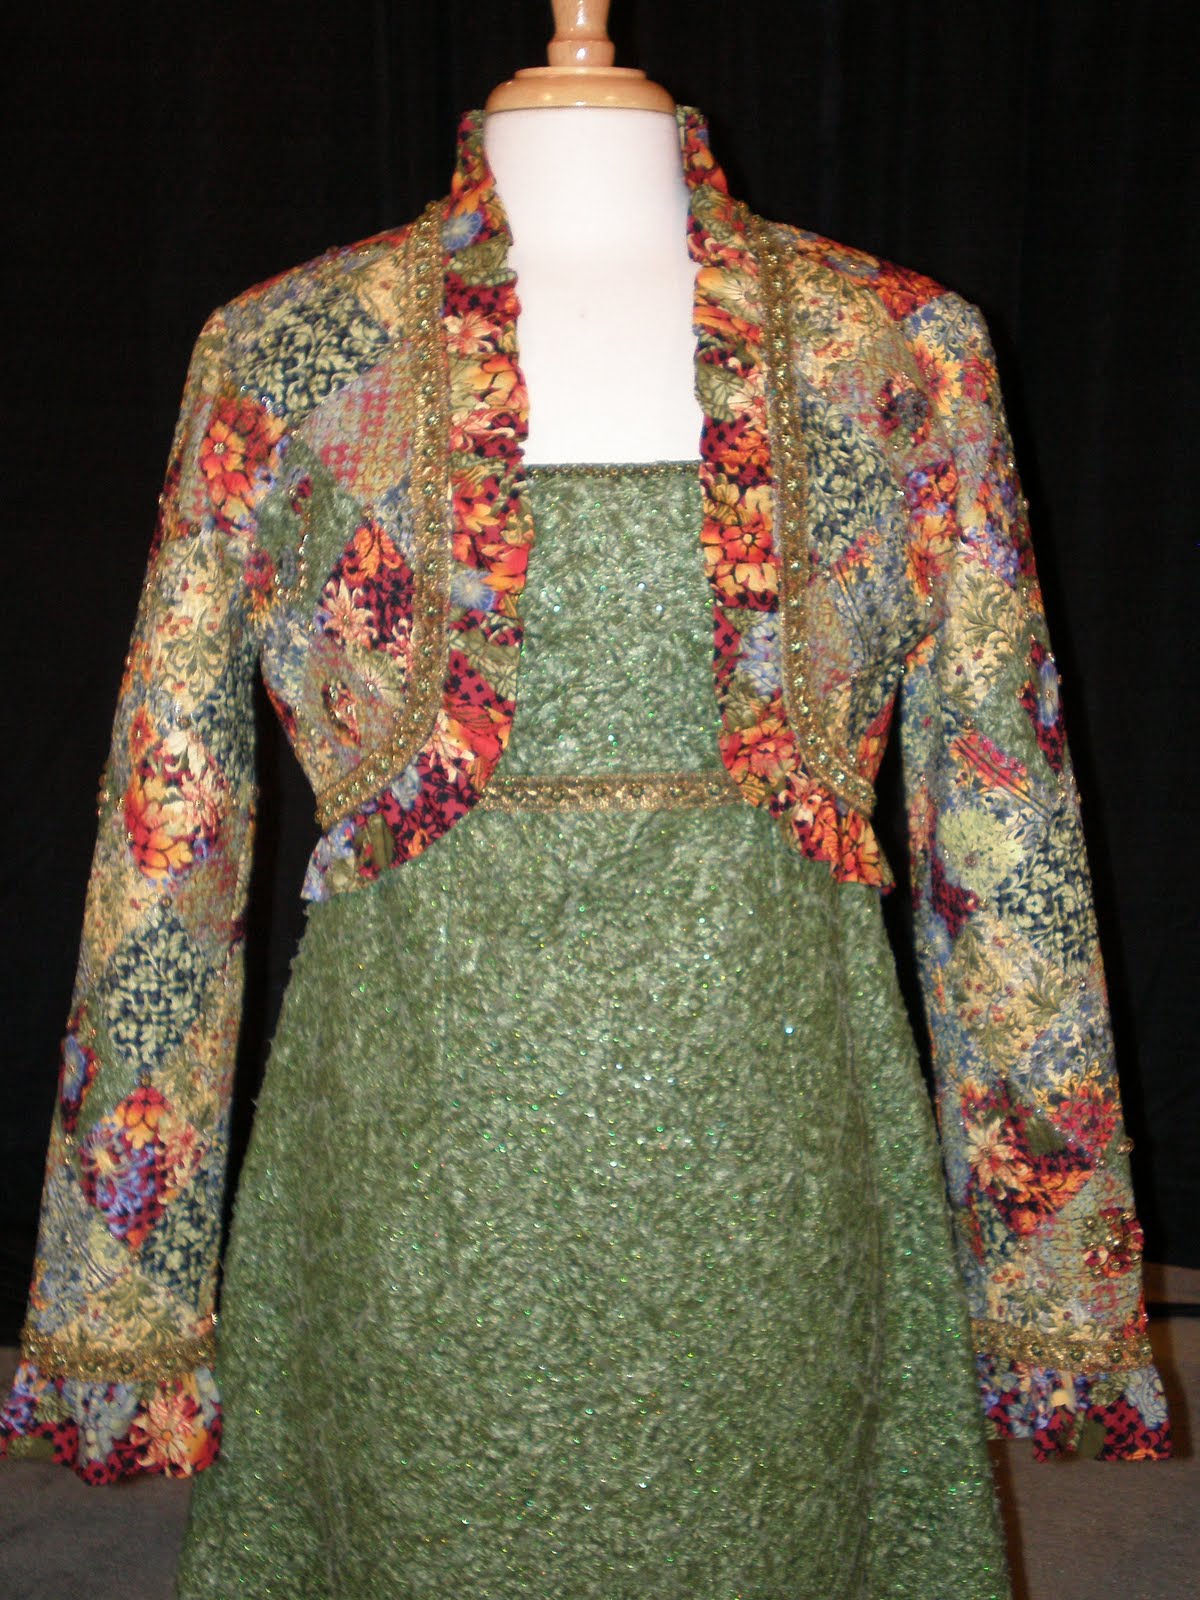 Delightful Diva Designs: Houston Quilt Market 2010 Part 2 The Garments